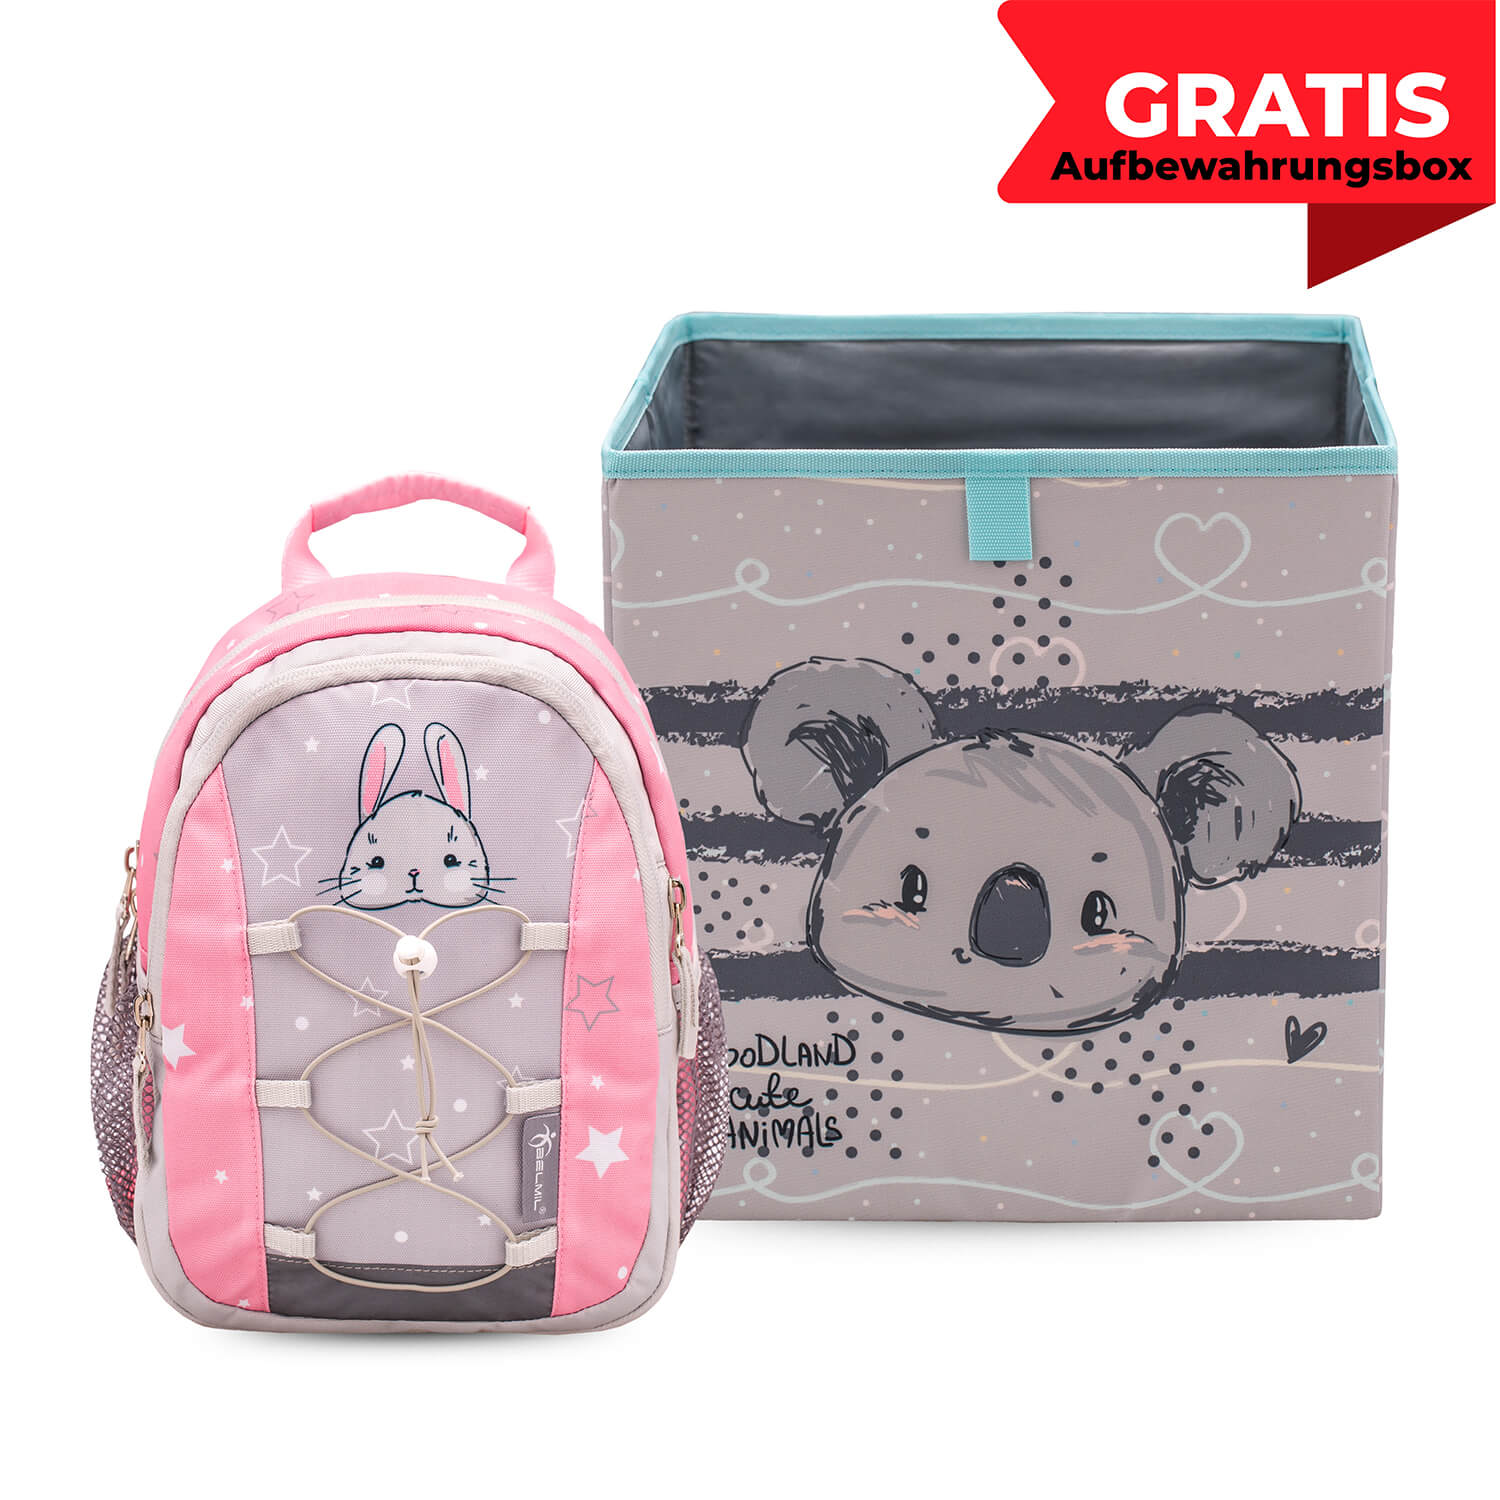 Mini Kiddy Woodland Rabbit Kindergarten Bag with GRATIS Storage box